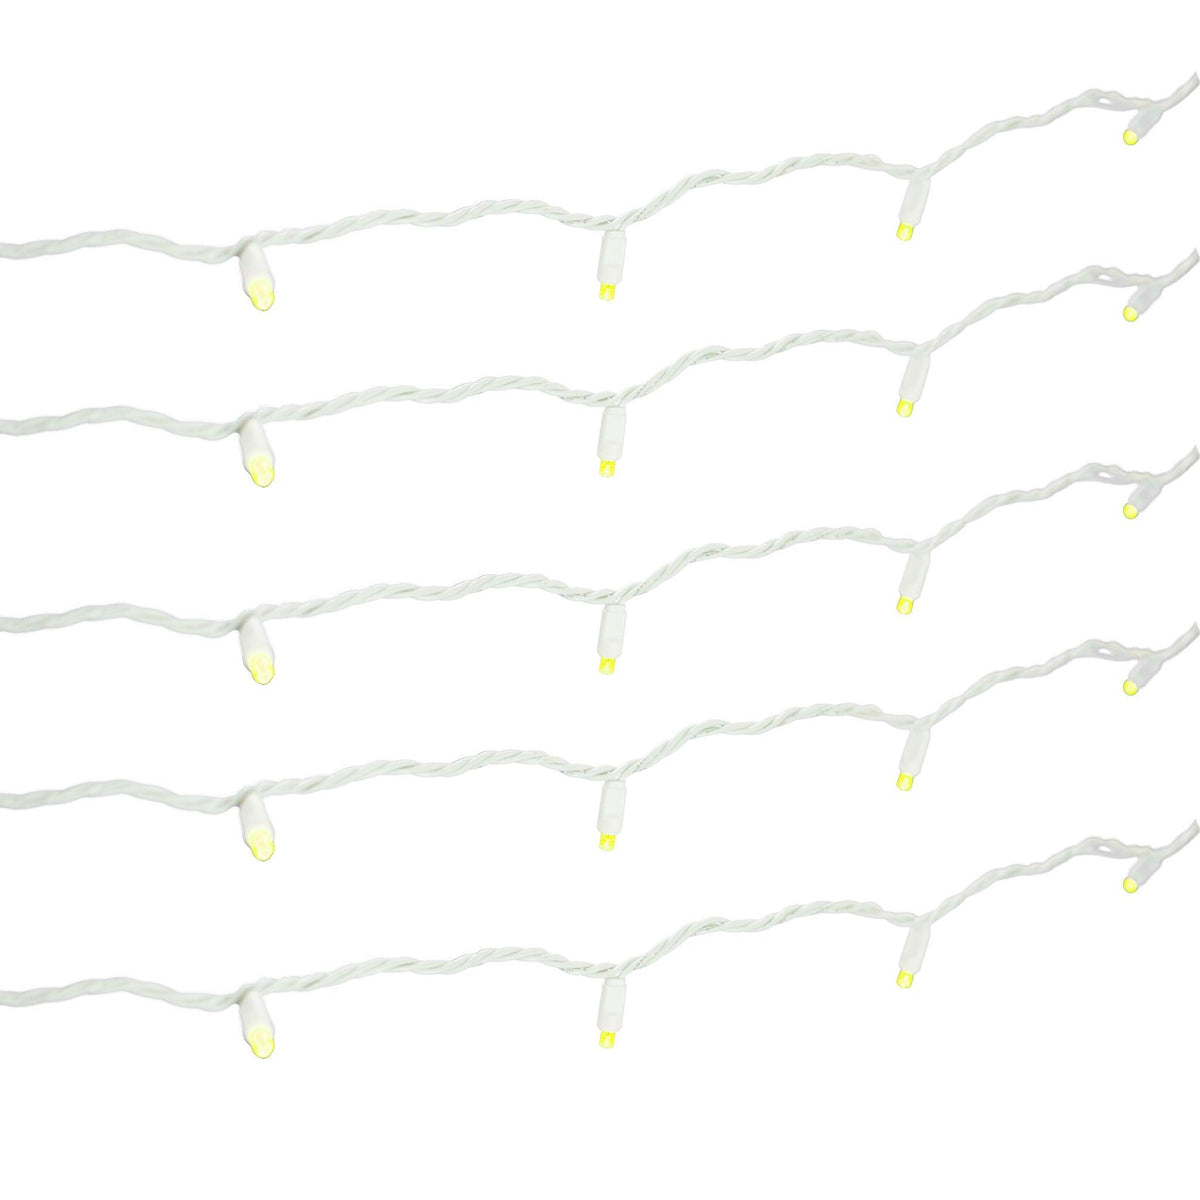 Lee Display's brand new & energy-efficient Yellow LED 5MM Mini Dot Christmas Lights 